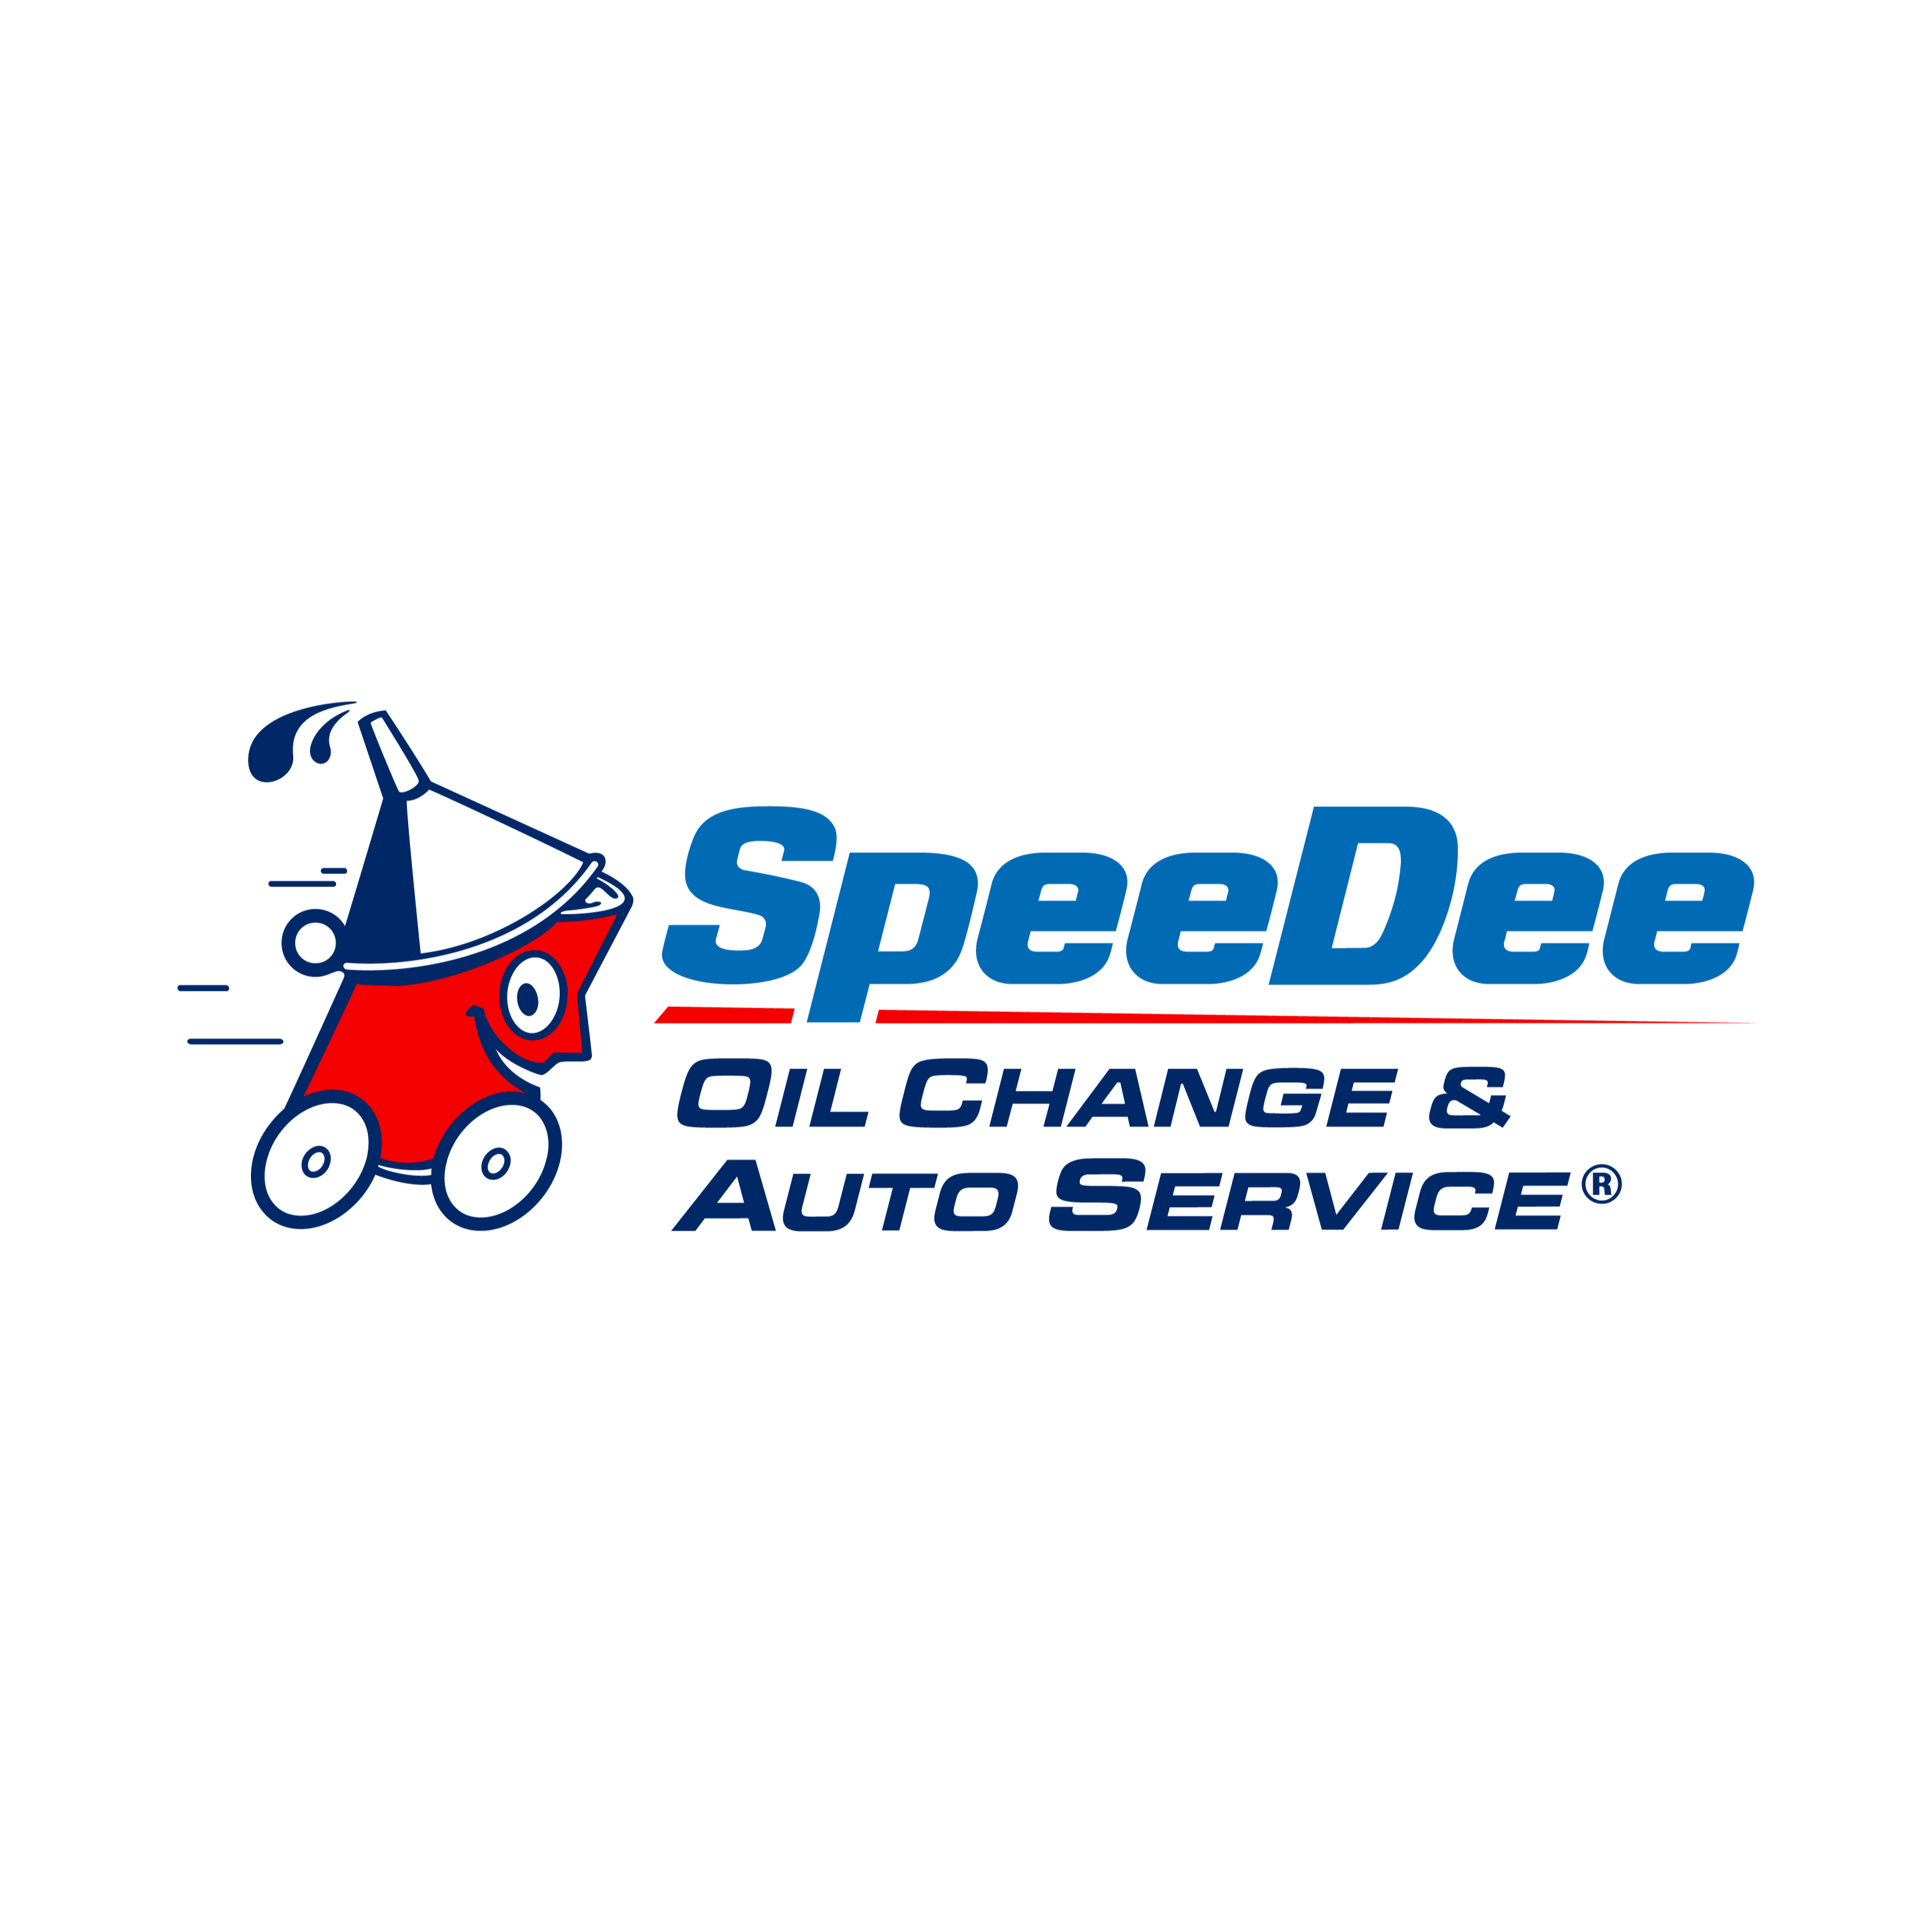 SpeeDee Oil Change & Auto Service - Metairie, LA 70005 - (504)828-1714 | ShowMeLocal.com